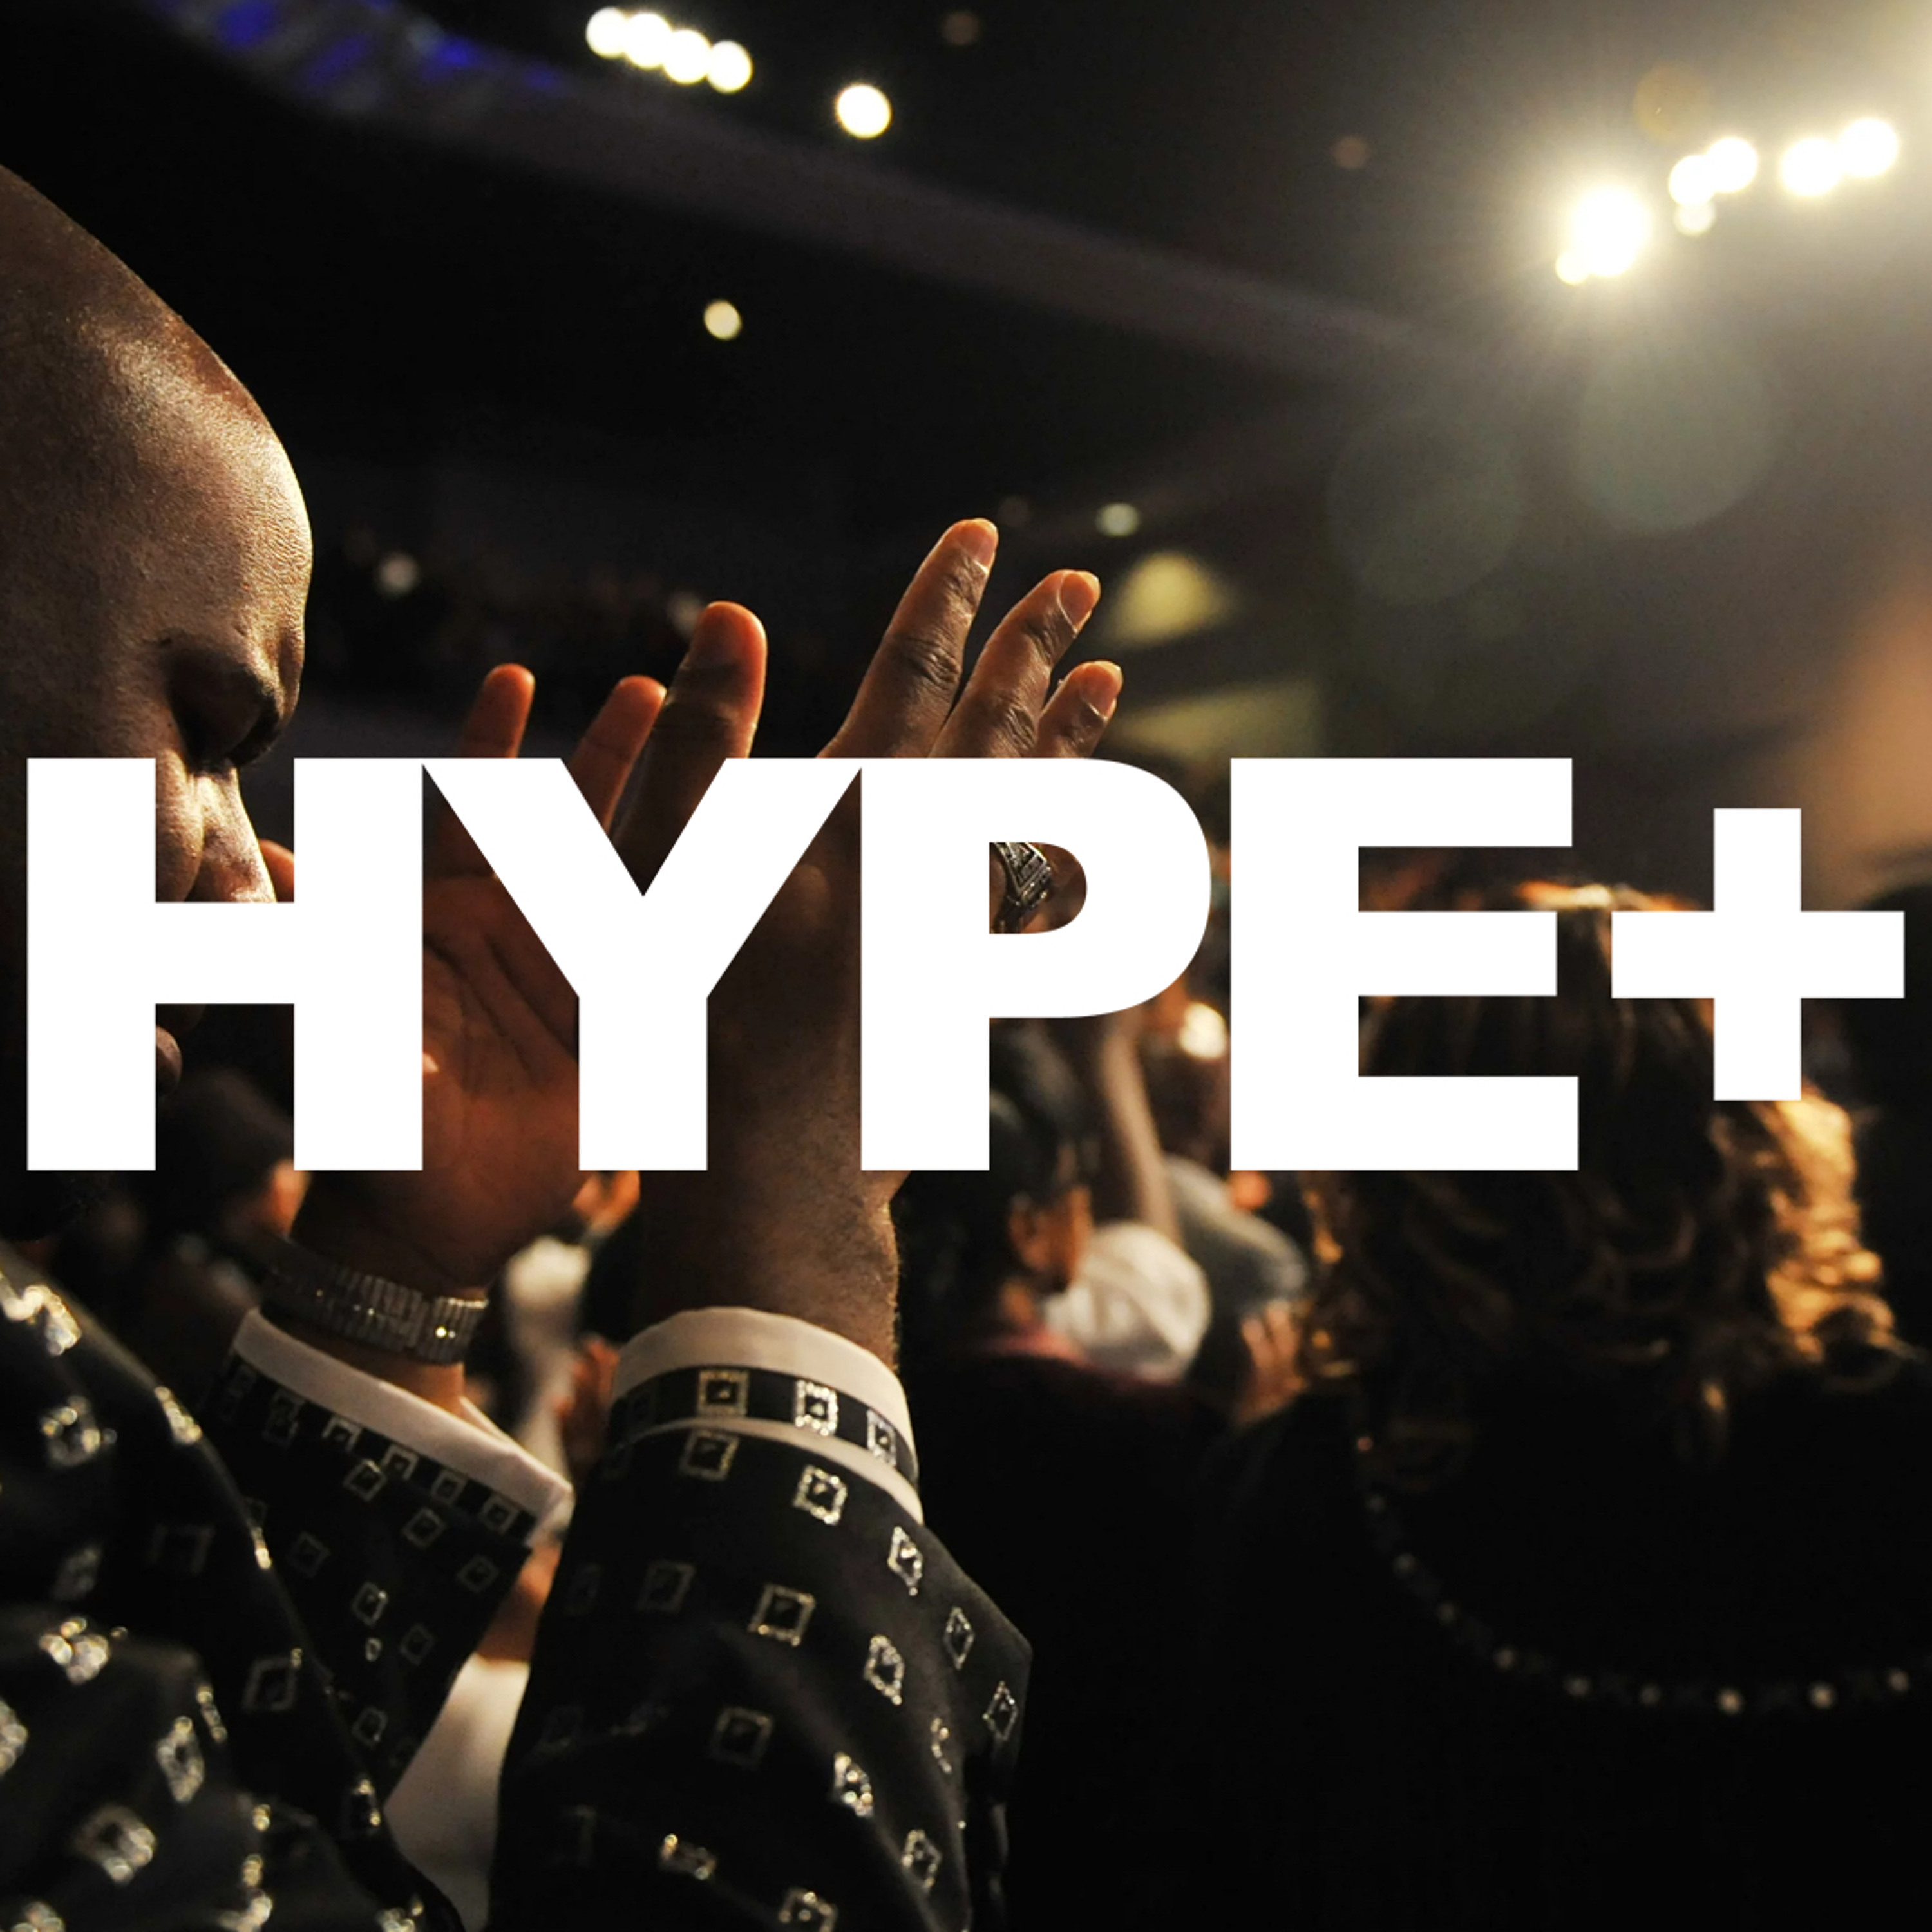 EP 147 - “Let’s Talk: Black Churches” #HypeAndThenSome